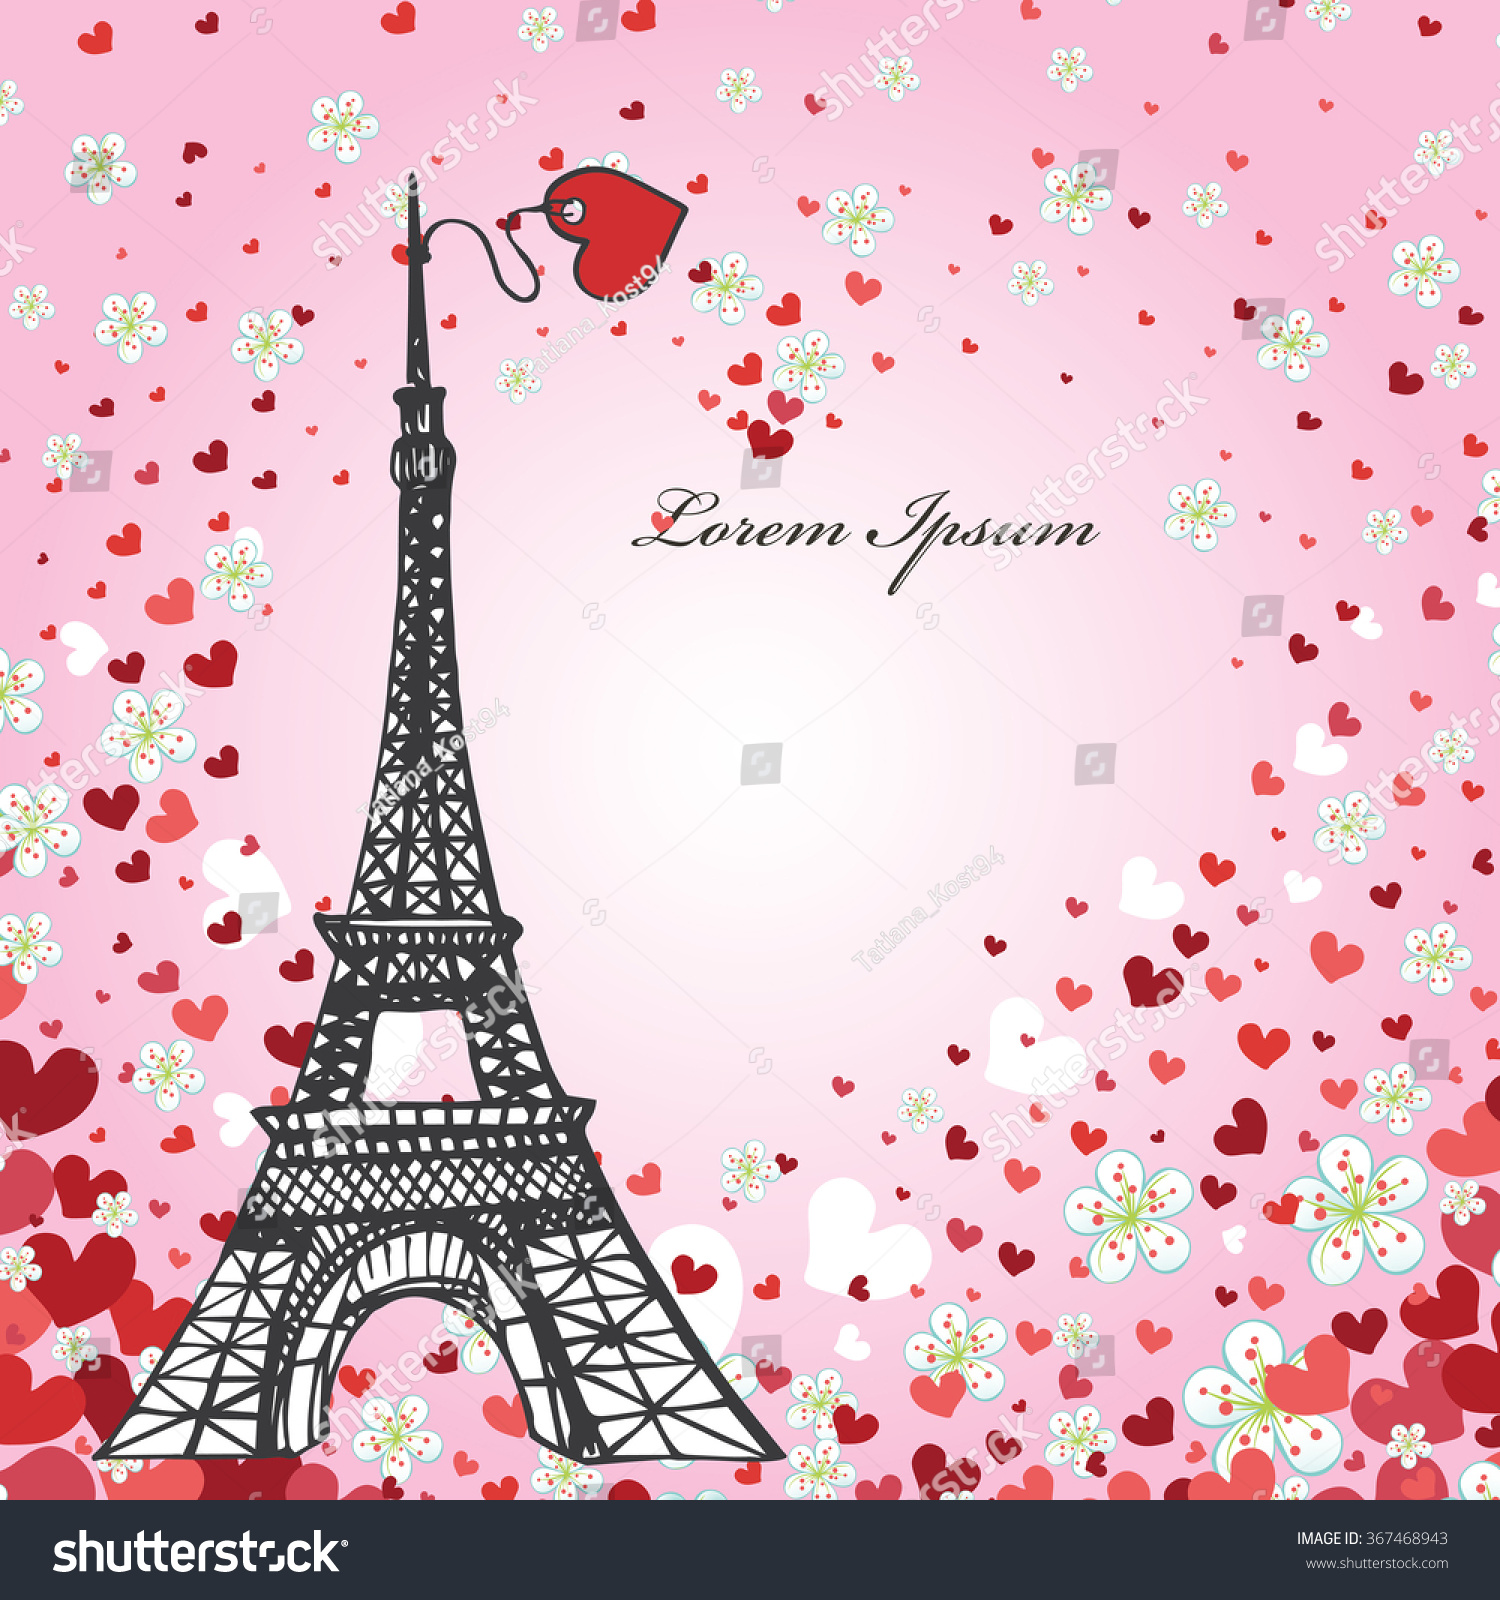 Romantic Paris Wallpapers